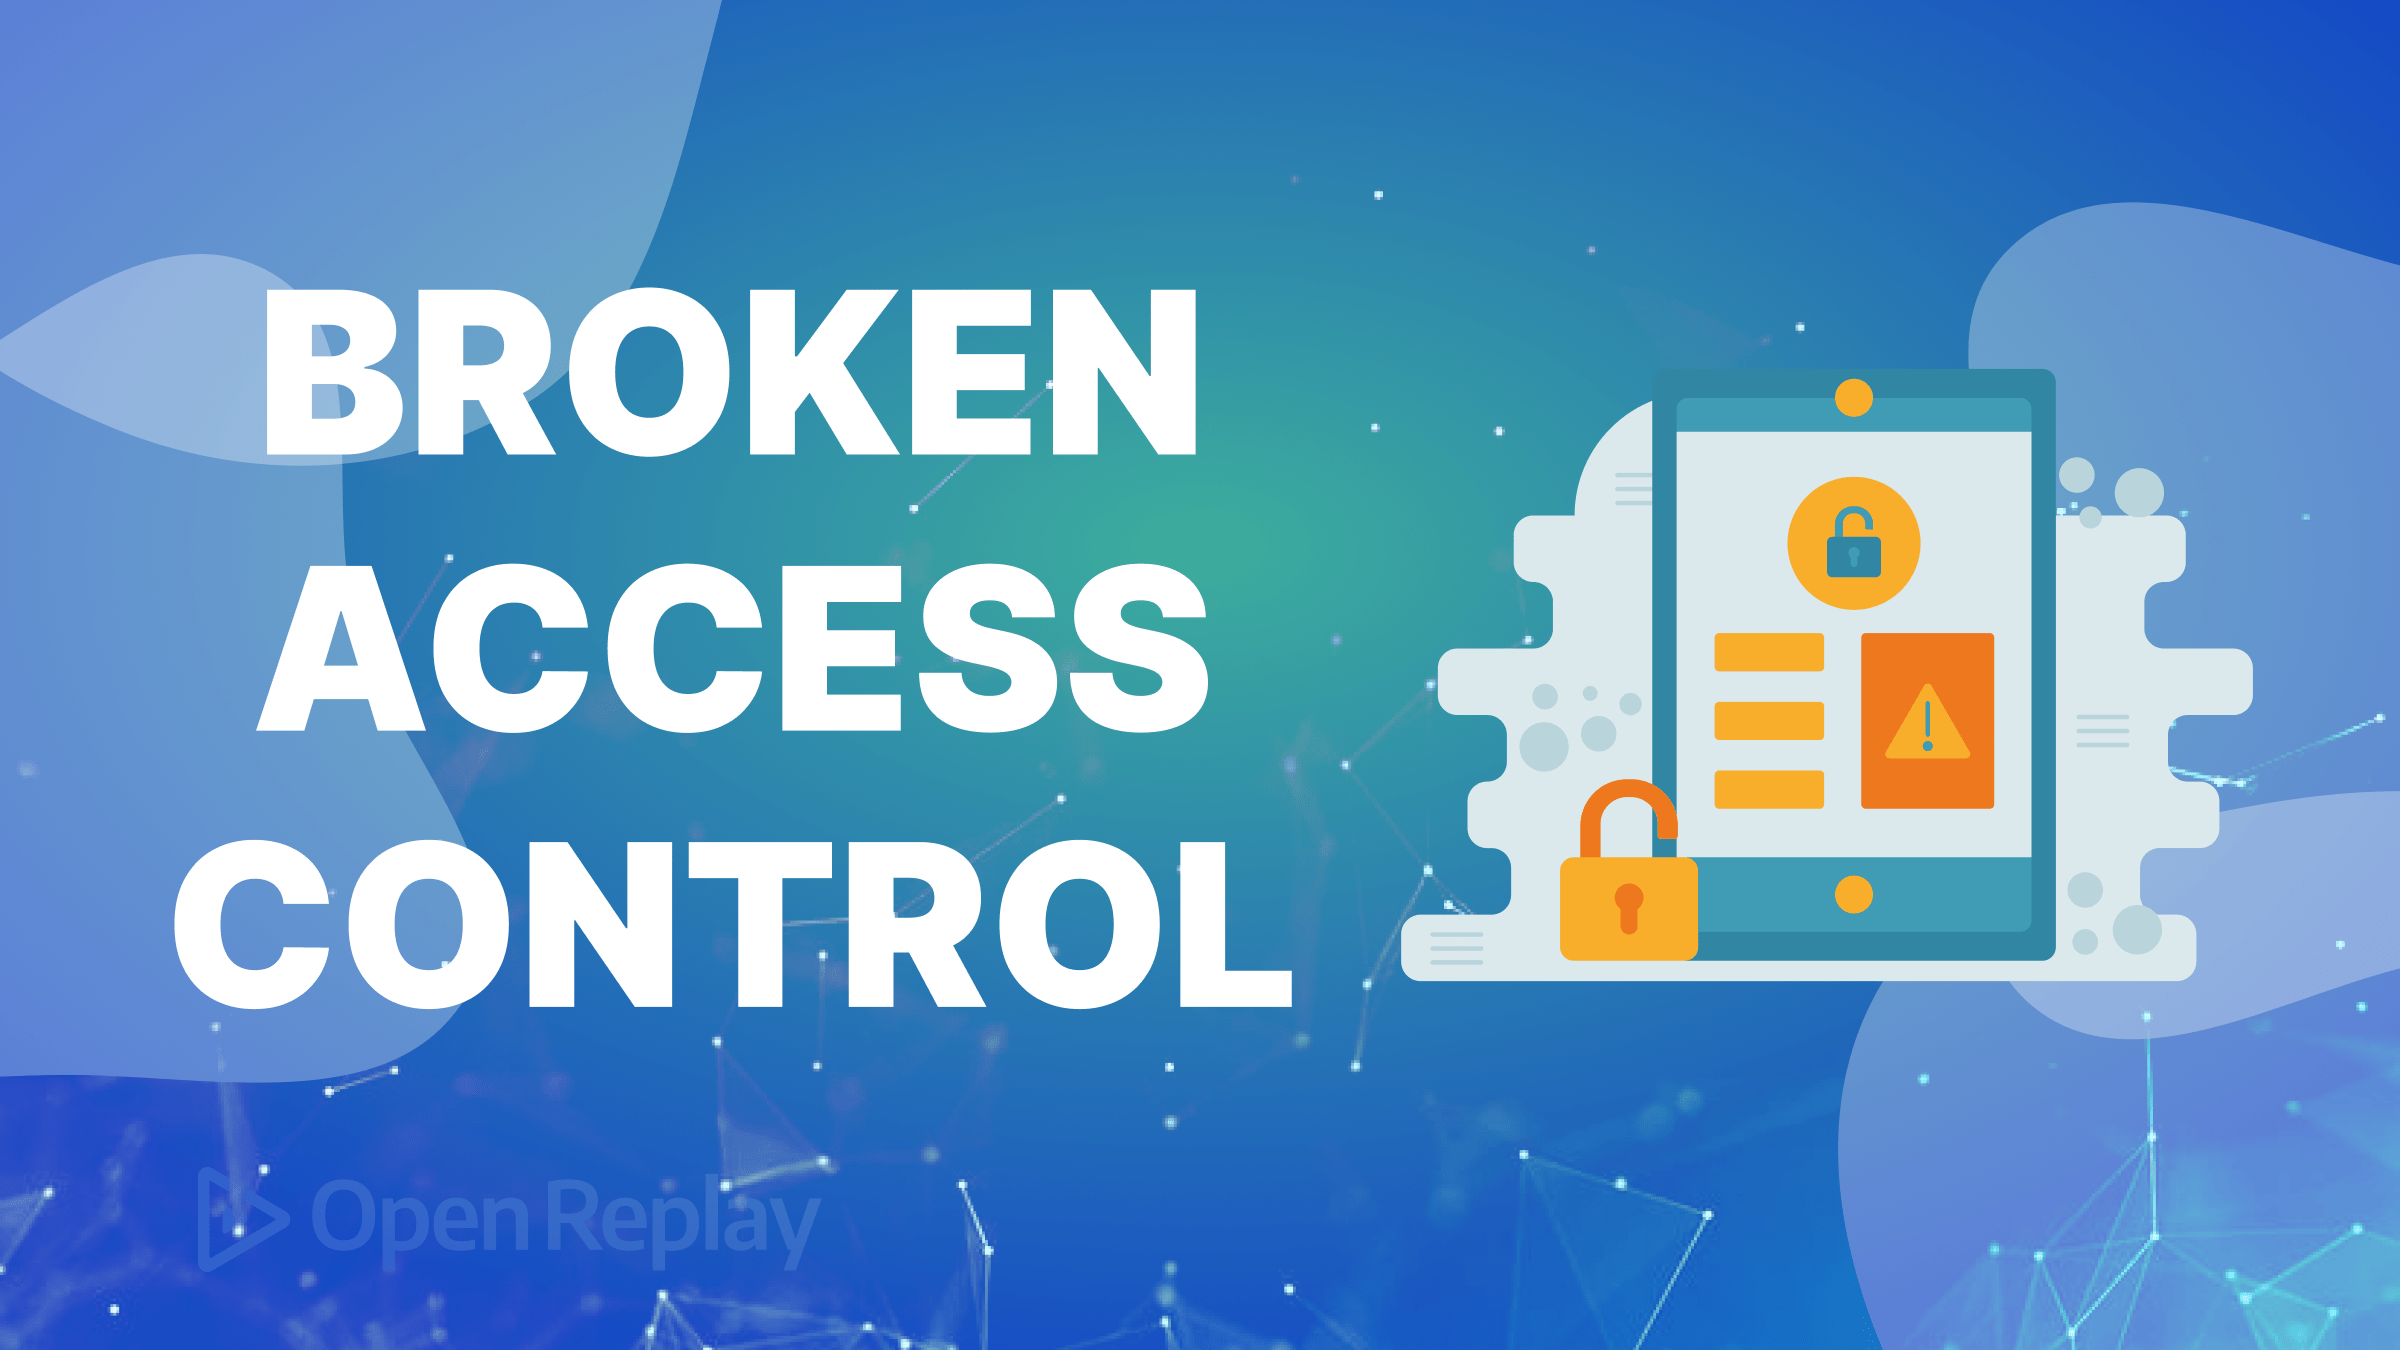 Broken Access Control: A Serious Web Vulnerability